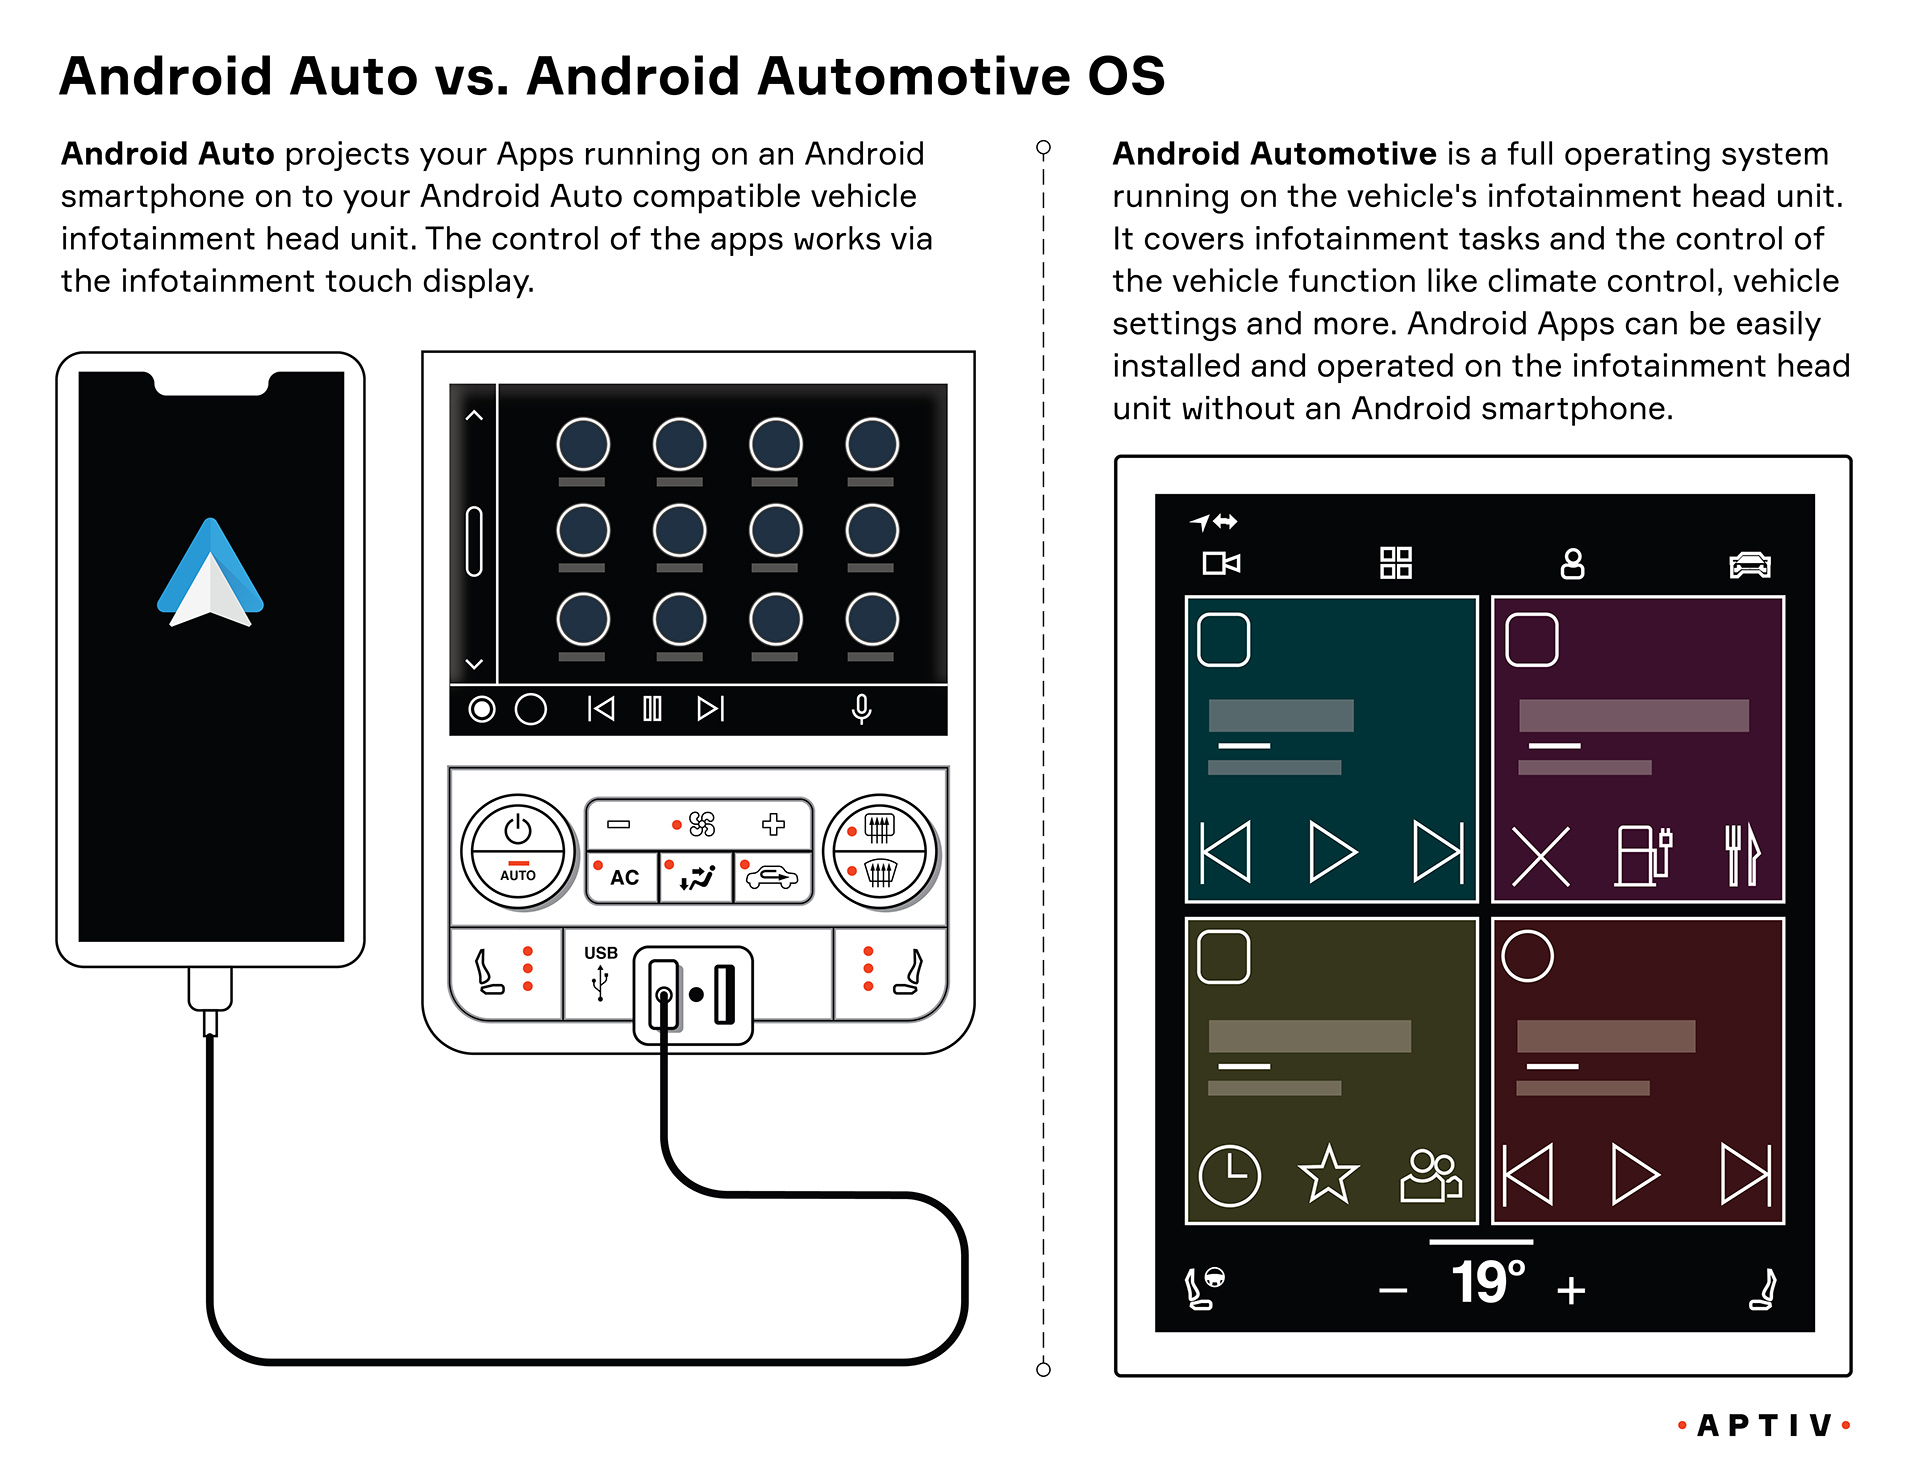 Android Automotive vs Auto